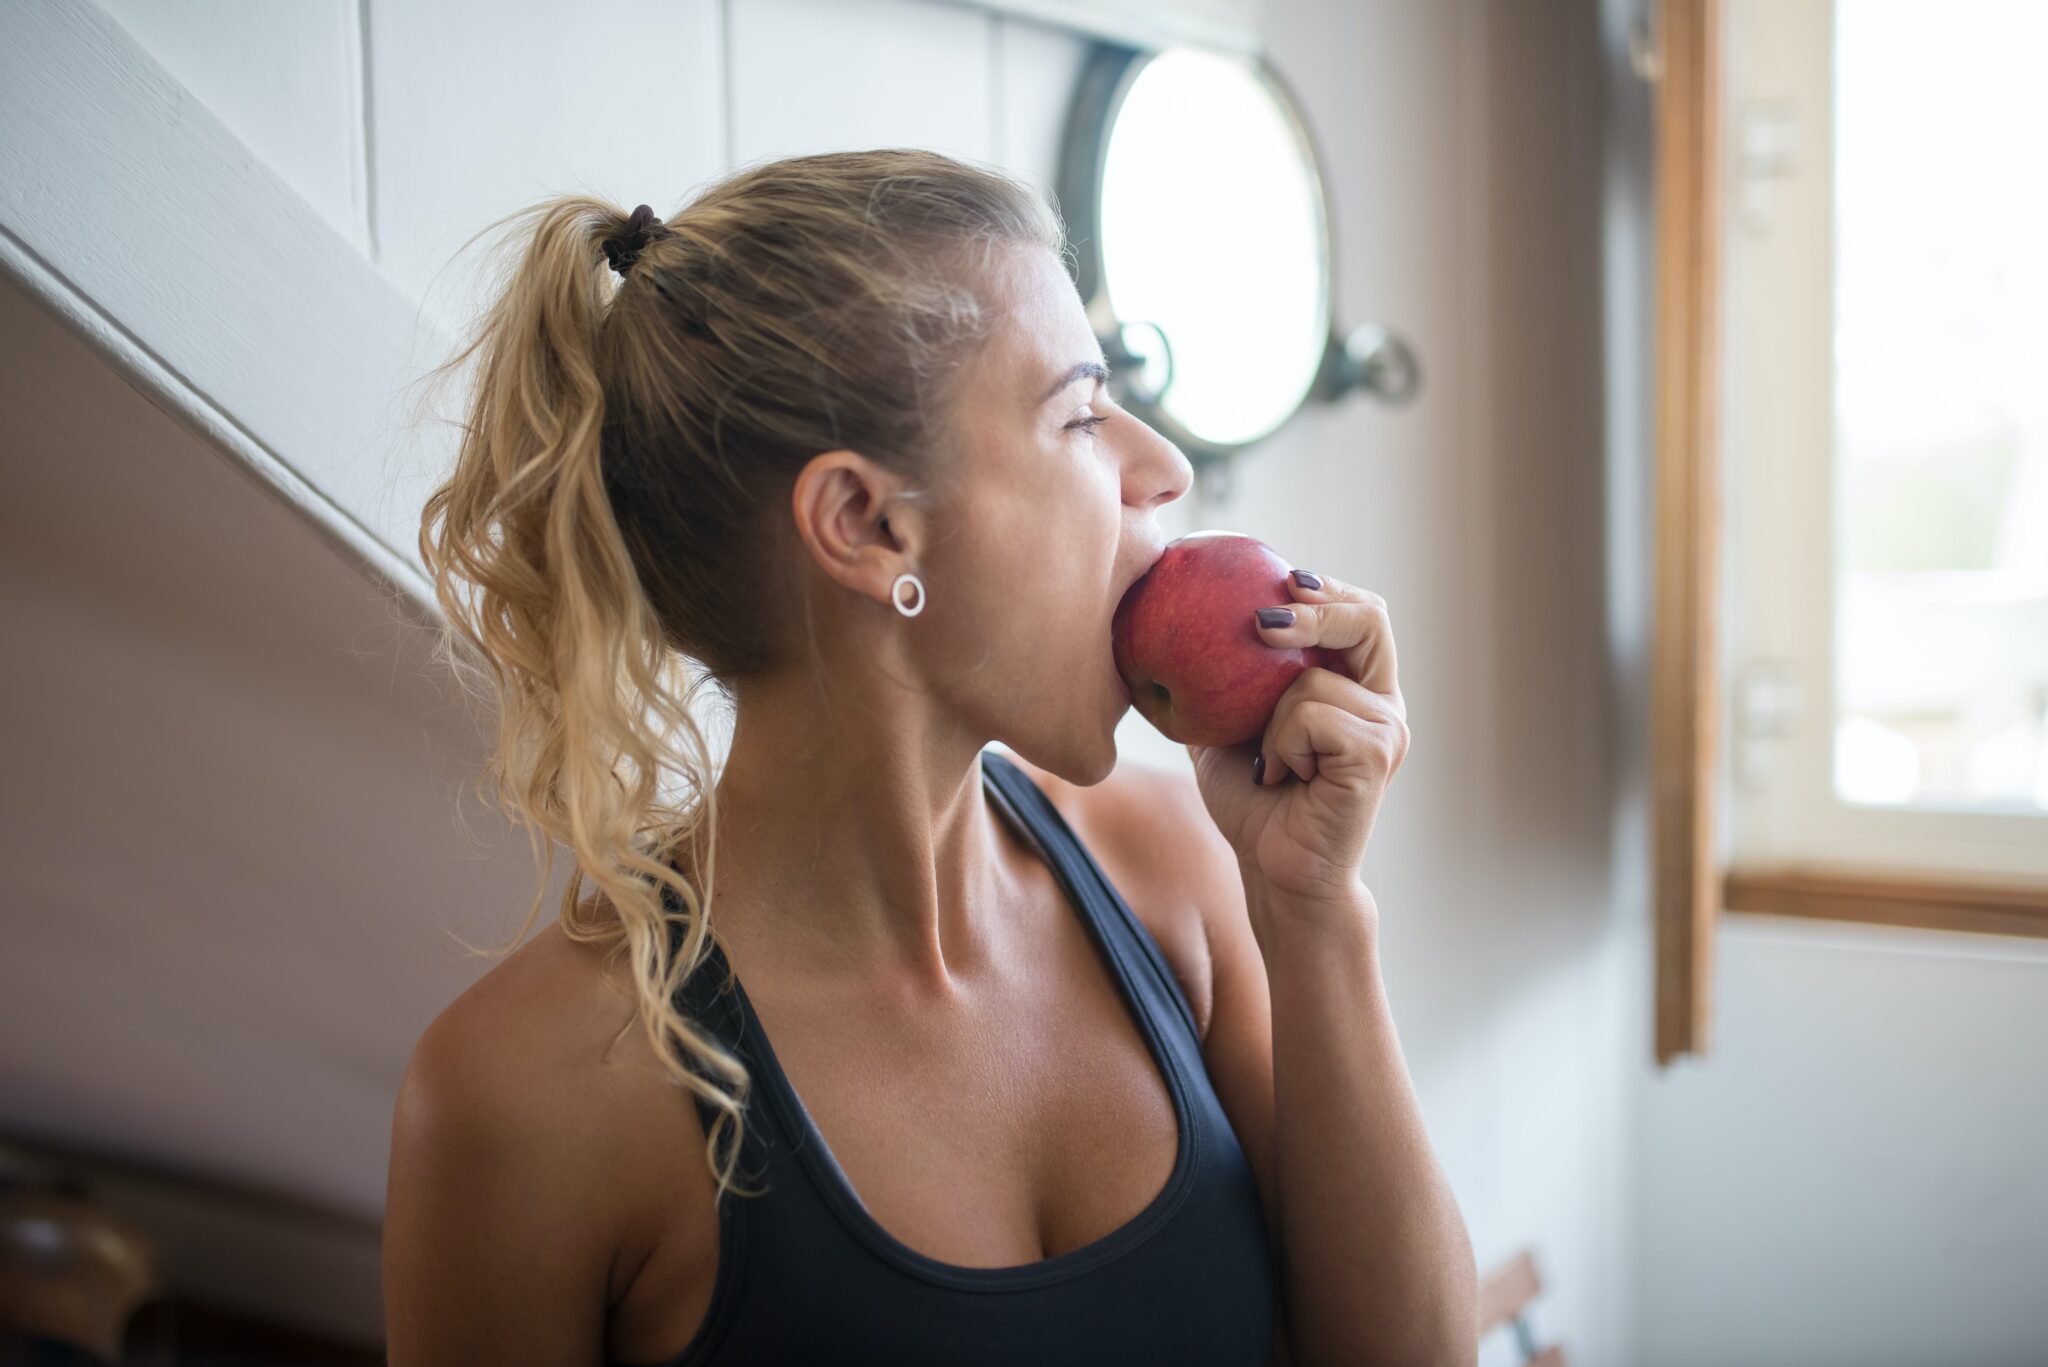 a woman eating an apple